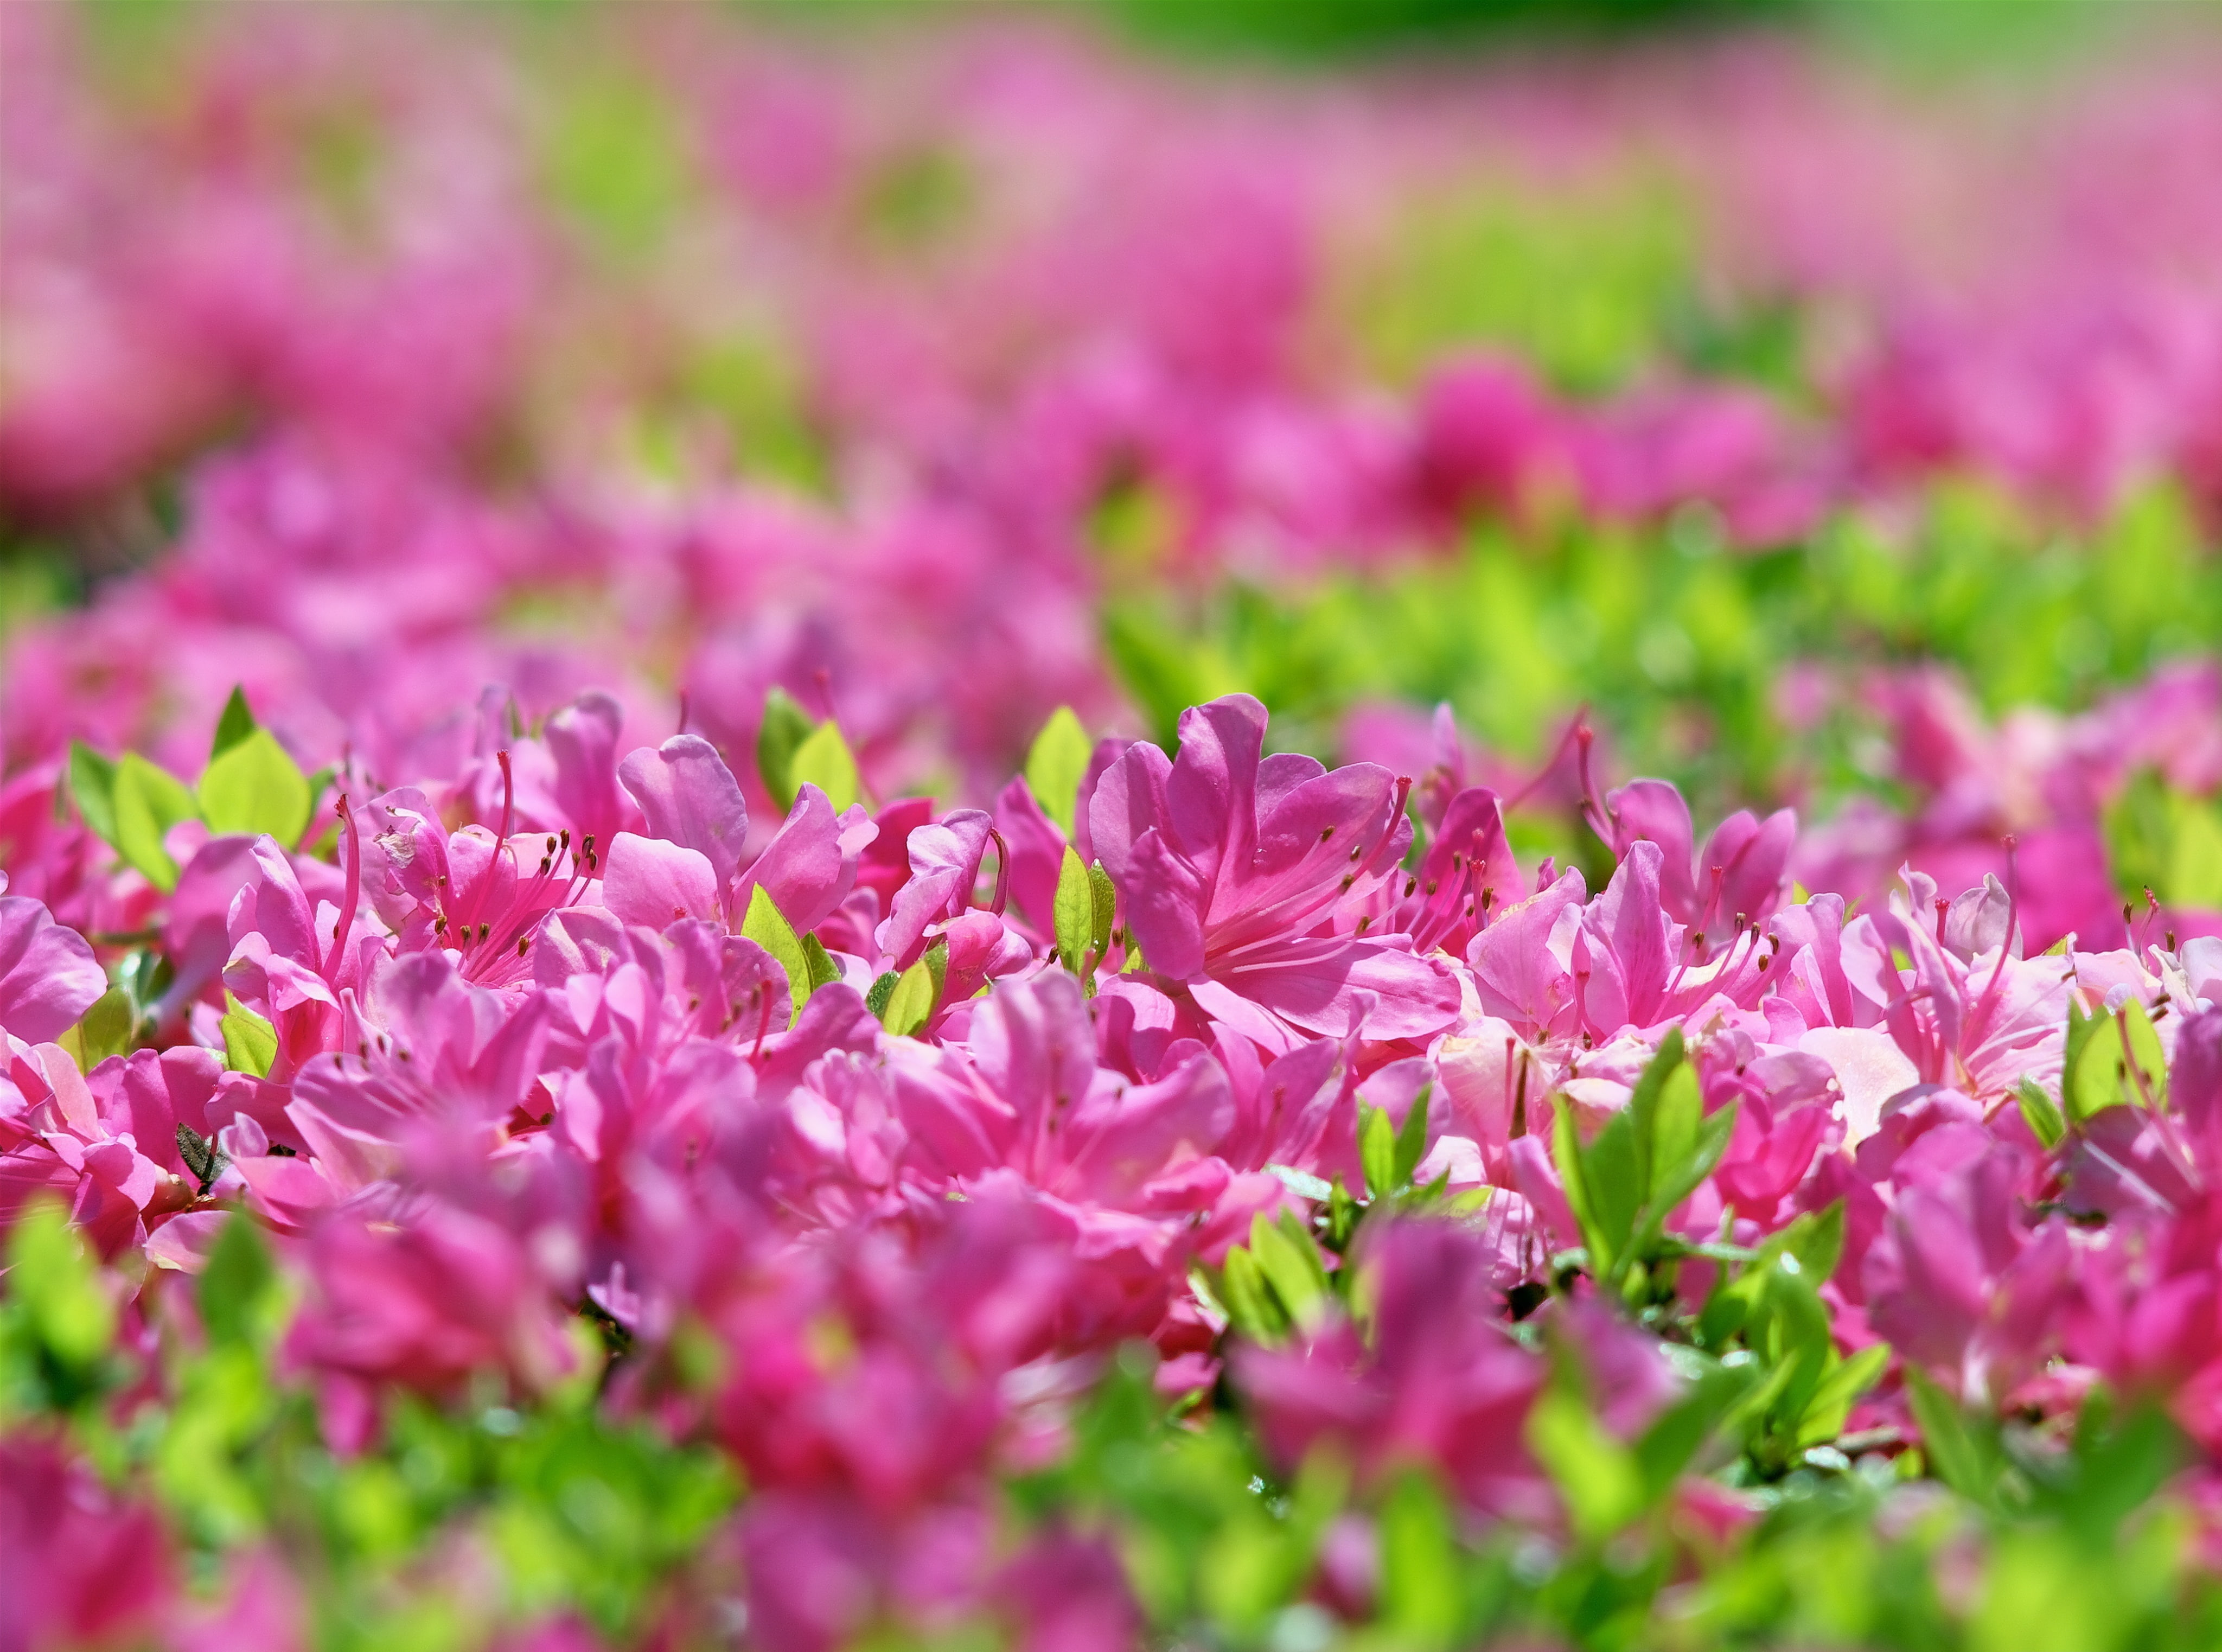 Rhododendron in Japan, pink clustered flowers, Seasons, Spring